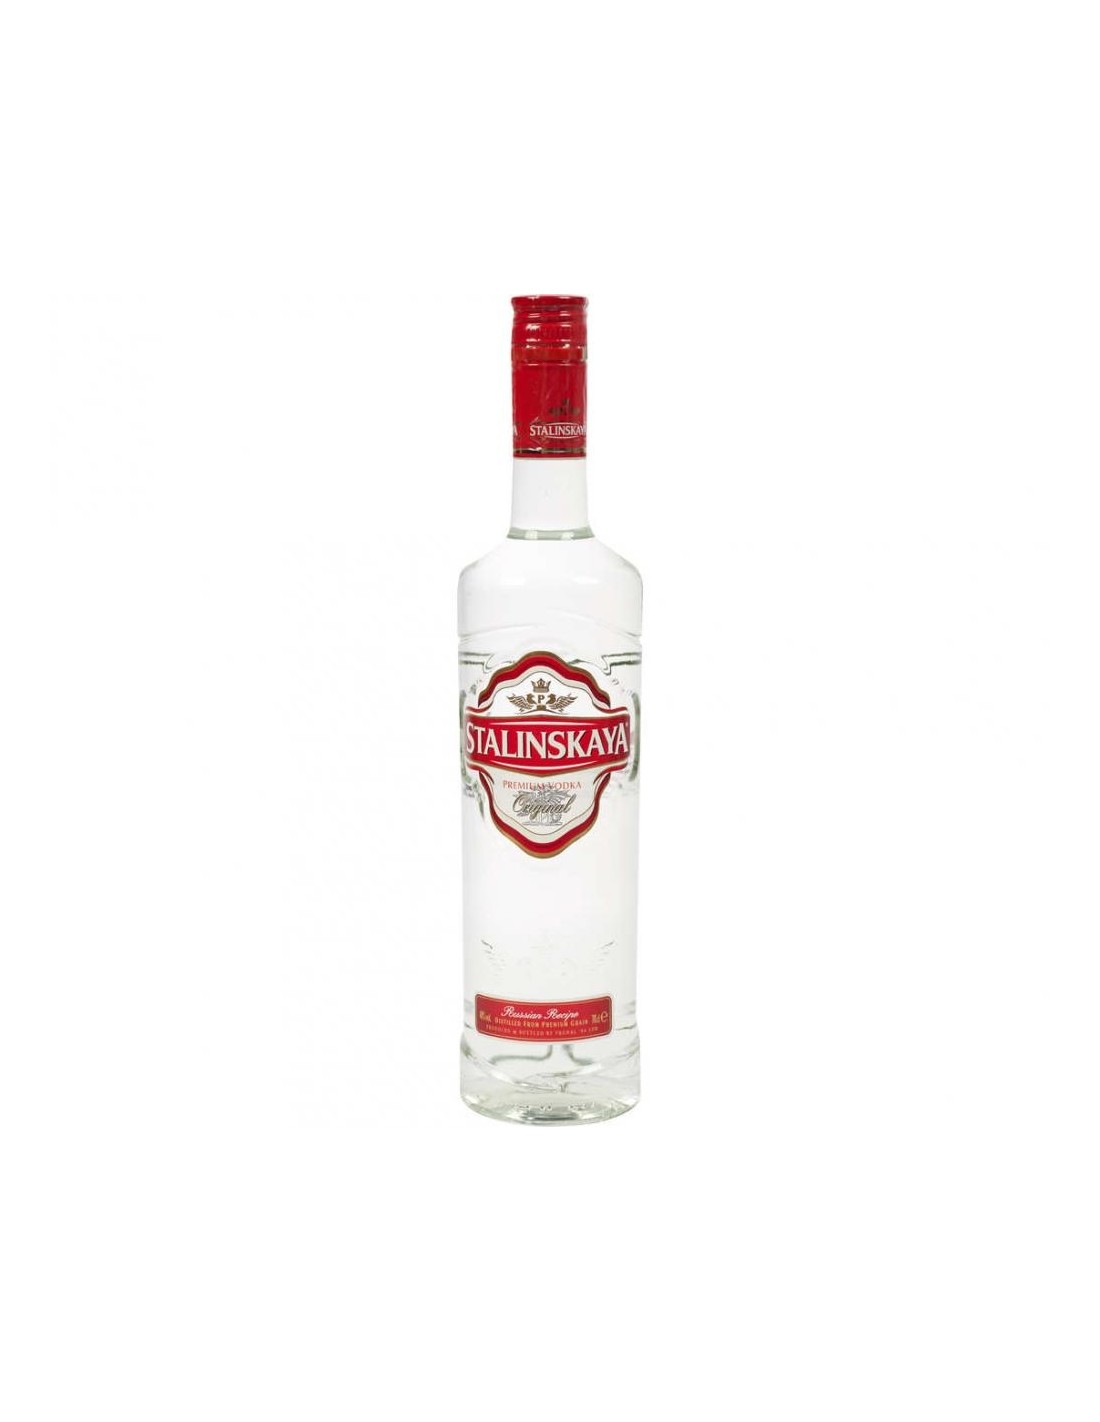 Vodca Stalinskaya, 0.5L, 40% alc., Romania alcooldiscount.ro